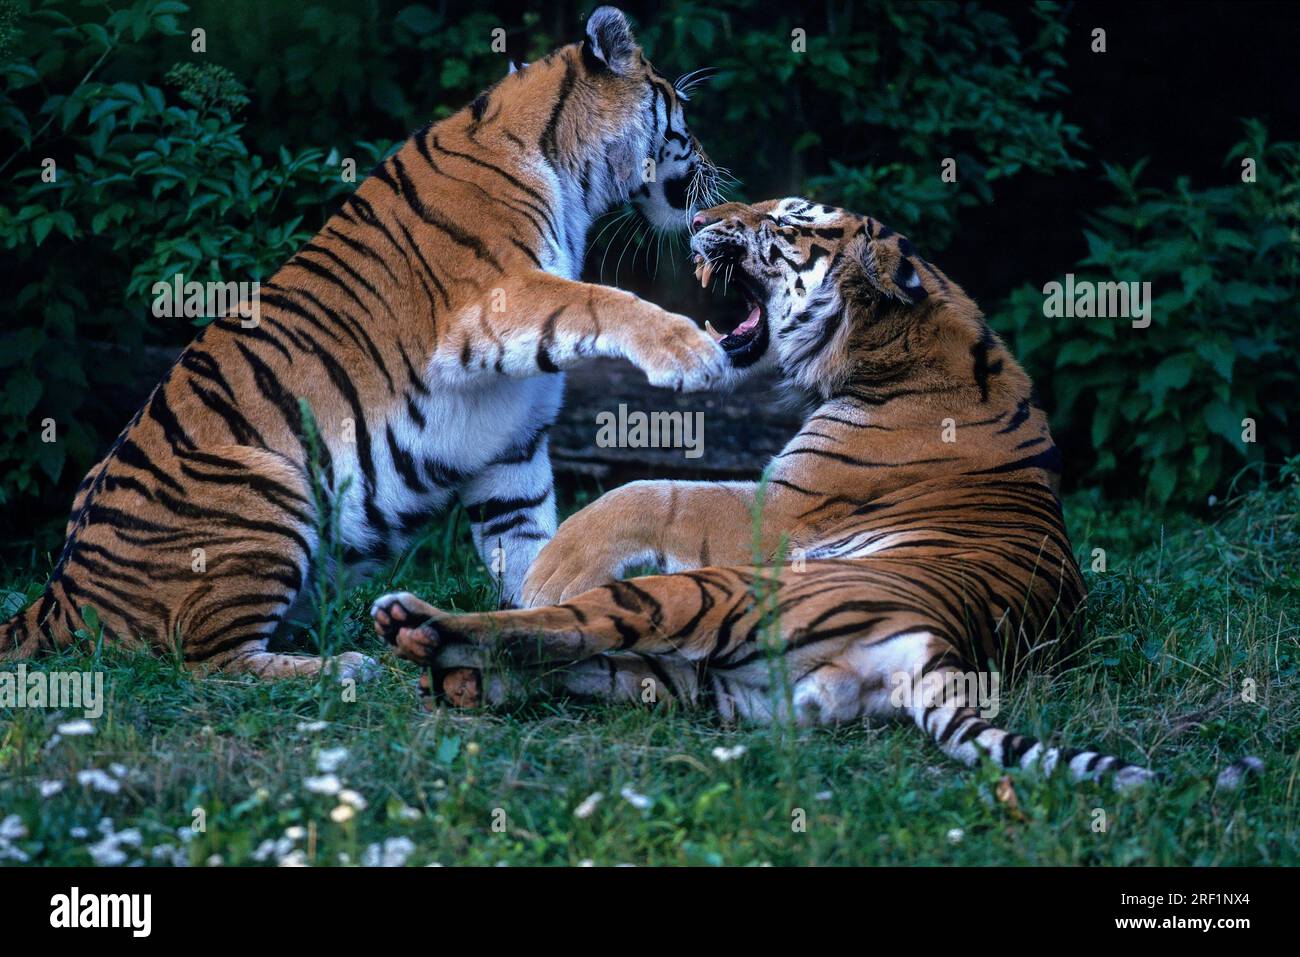 Siberian tiger (Panthera tigris altaica) at the zoo, Siberian tiger or Amur tiger, fighting Stock Photo